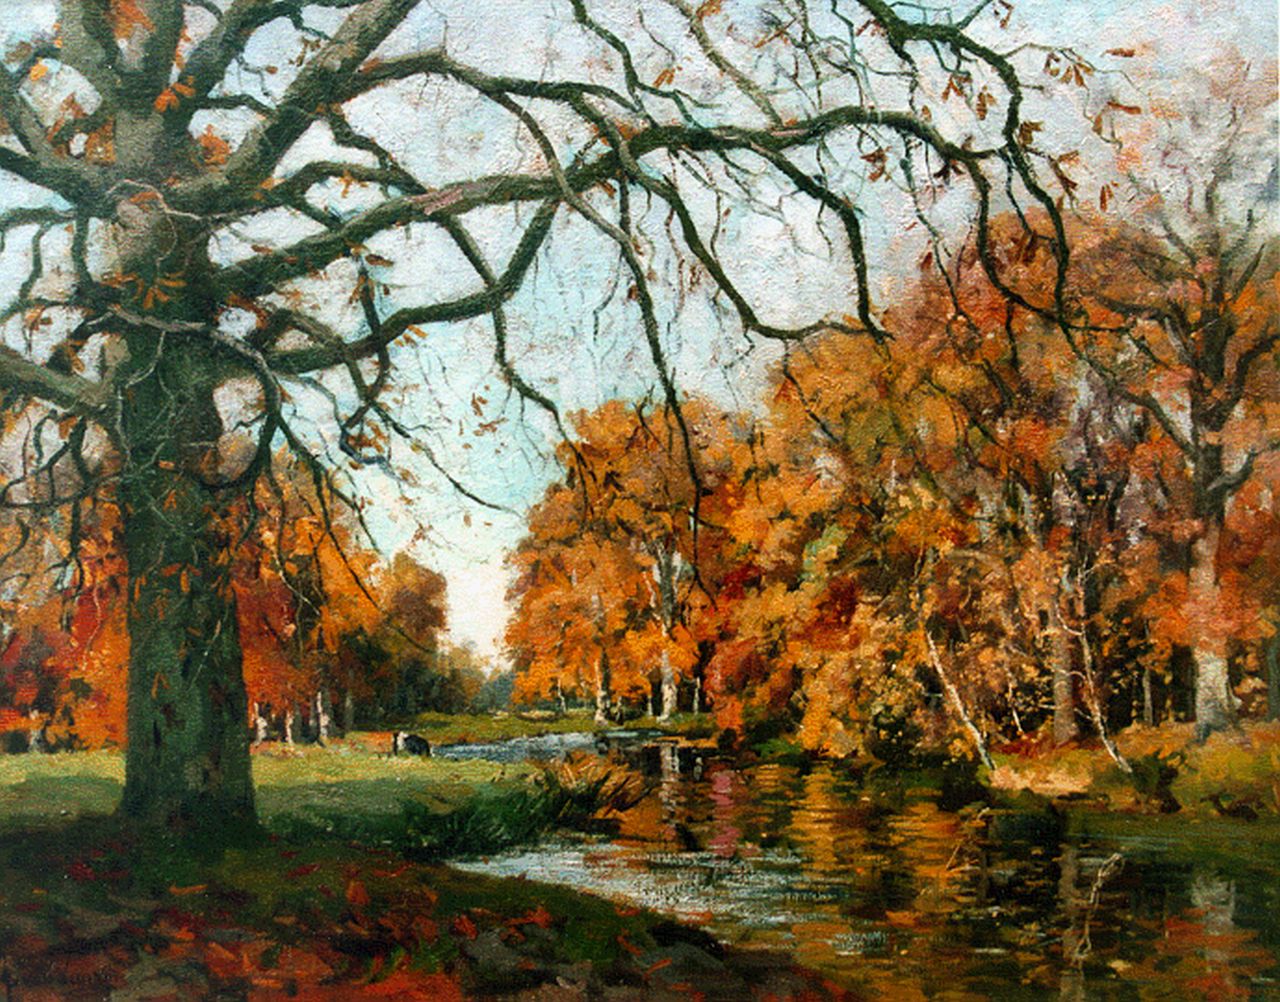 Vuuren J. van | Jan van Vuuren, Fall woods, oil on canvas 55.0 x 71.0 cm, signed l.l.